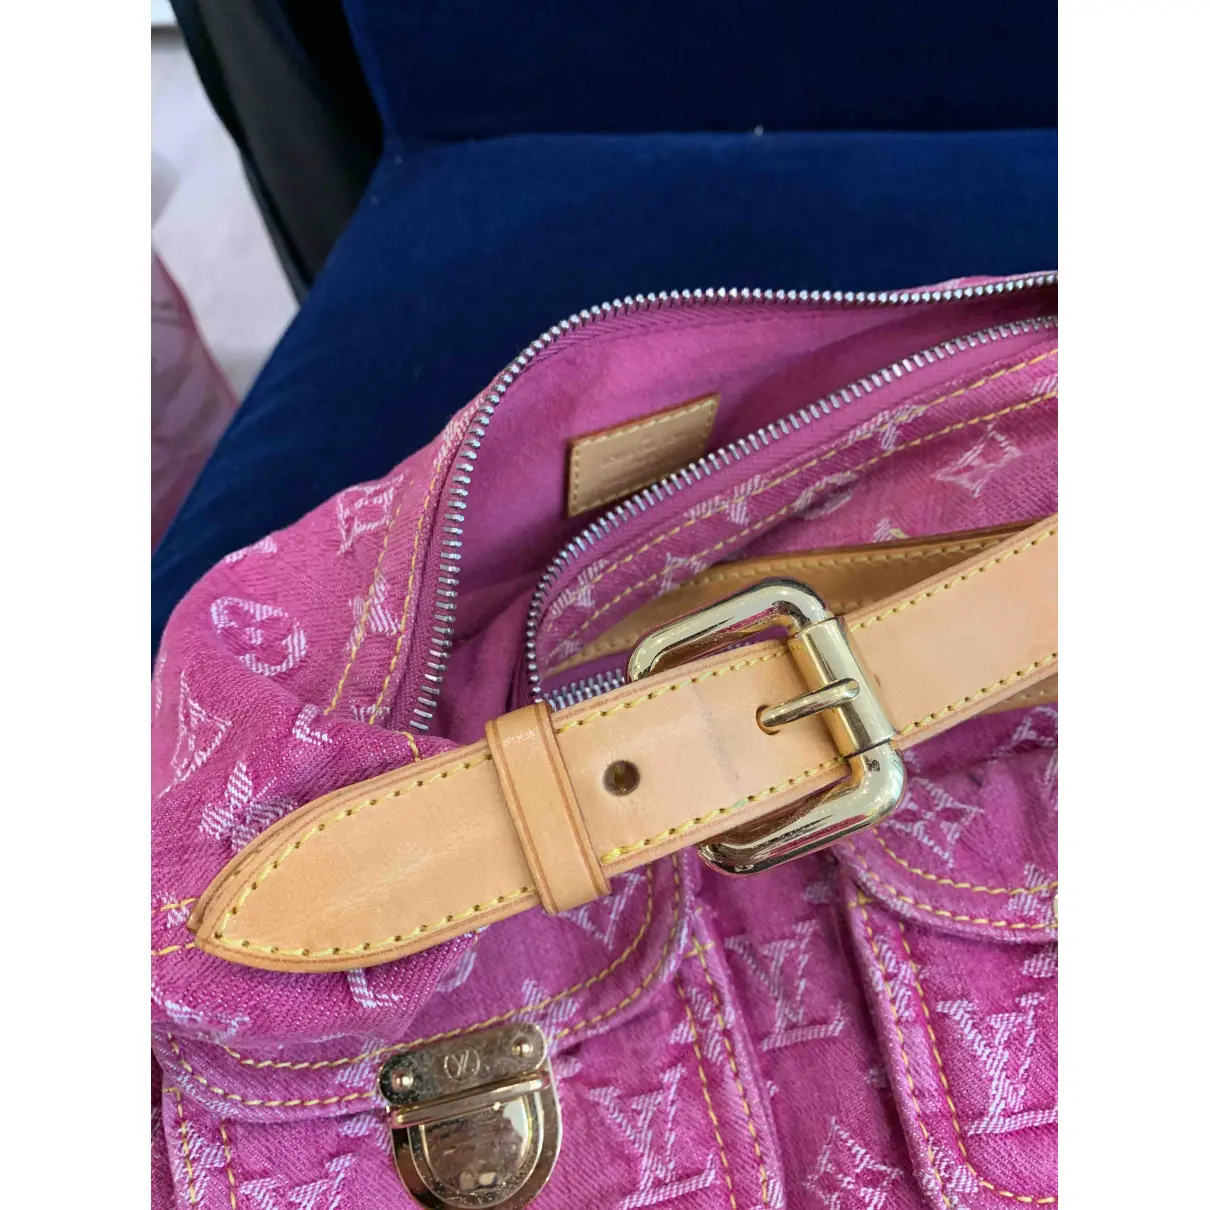 Buy Louis Vuitton Baggy cloth handbag online